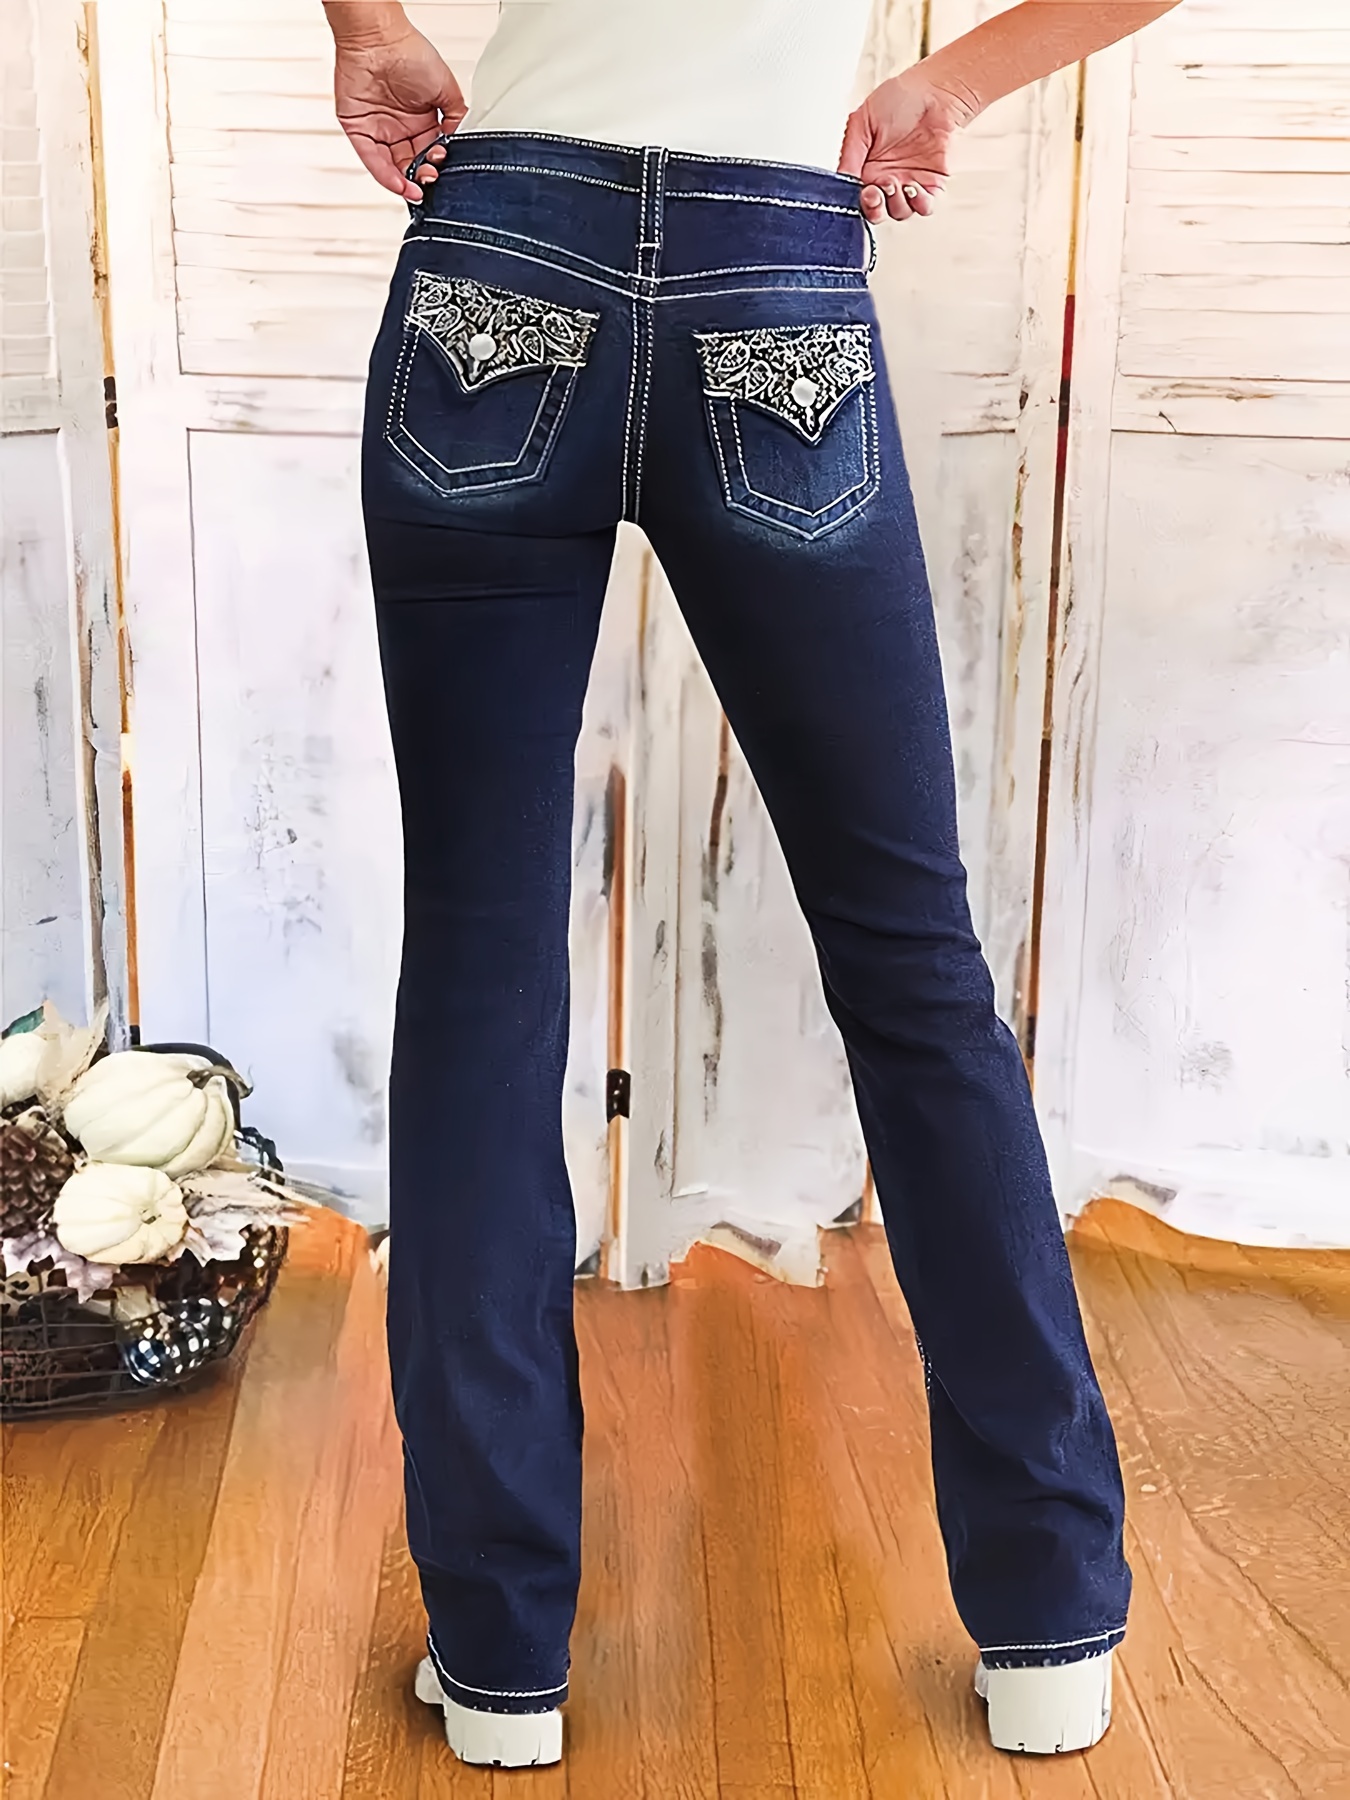 WonderFit Denim Jeans, Slimming Pants for Women